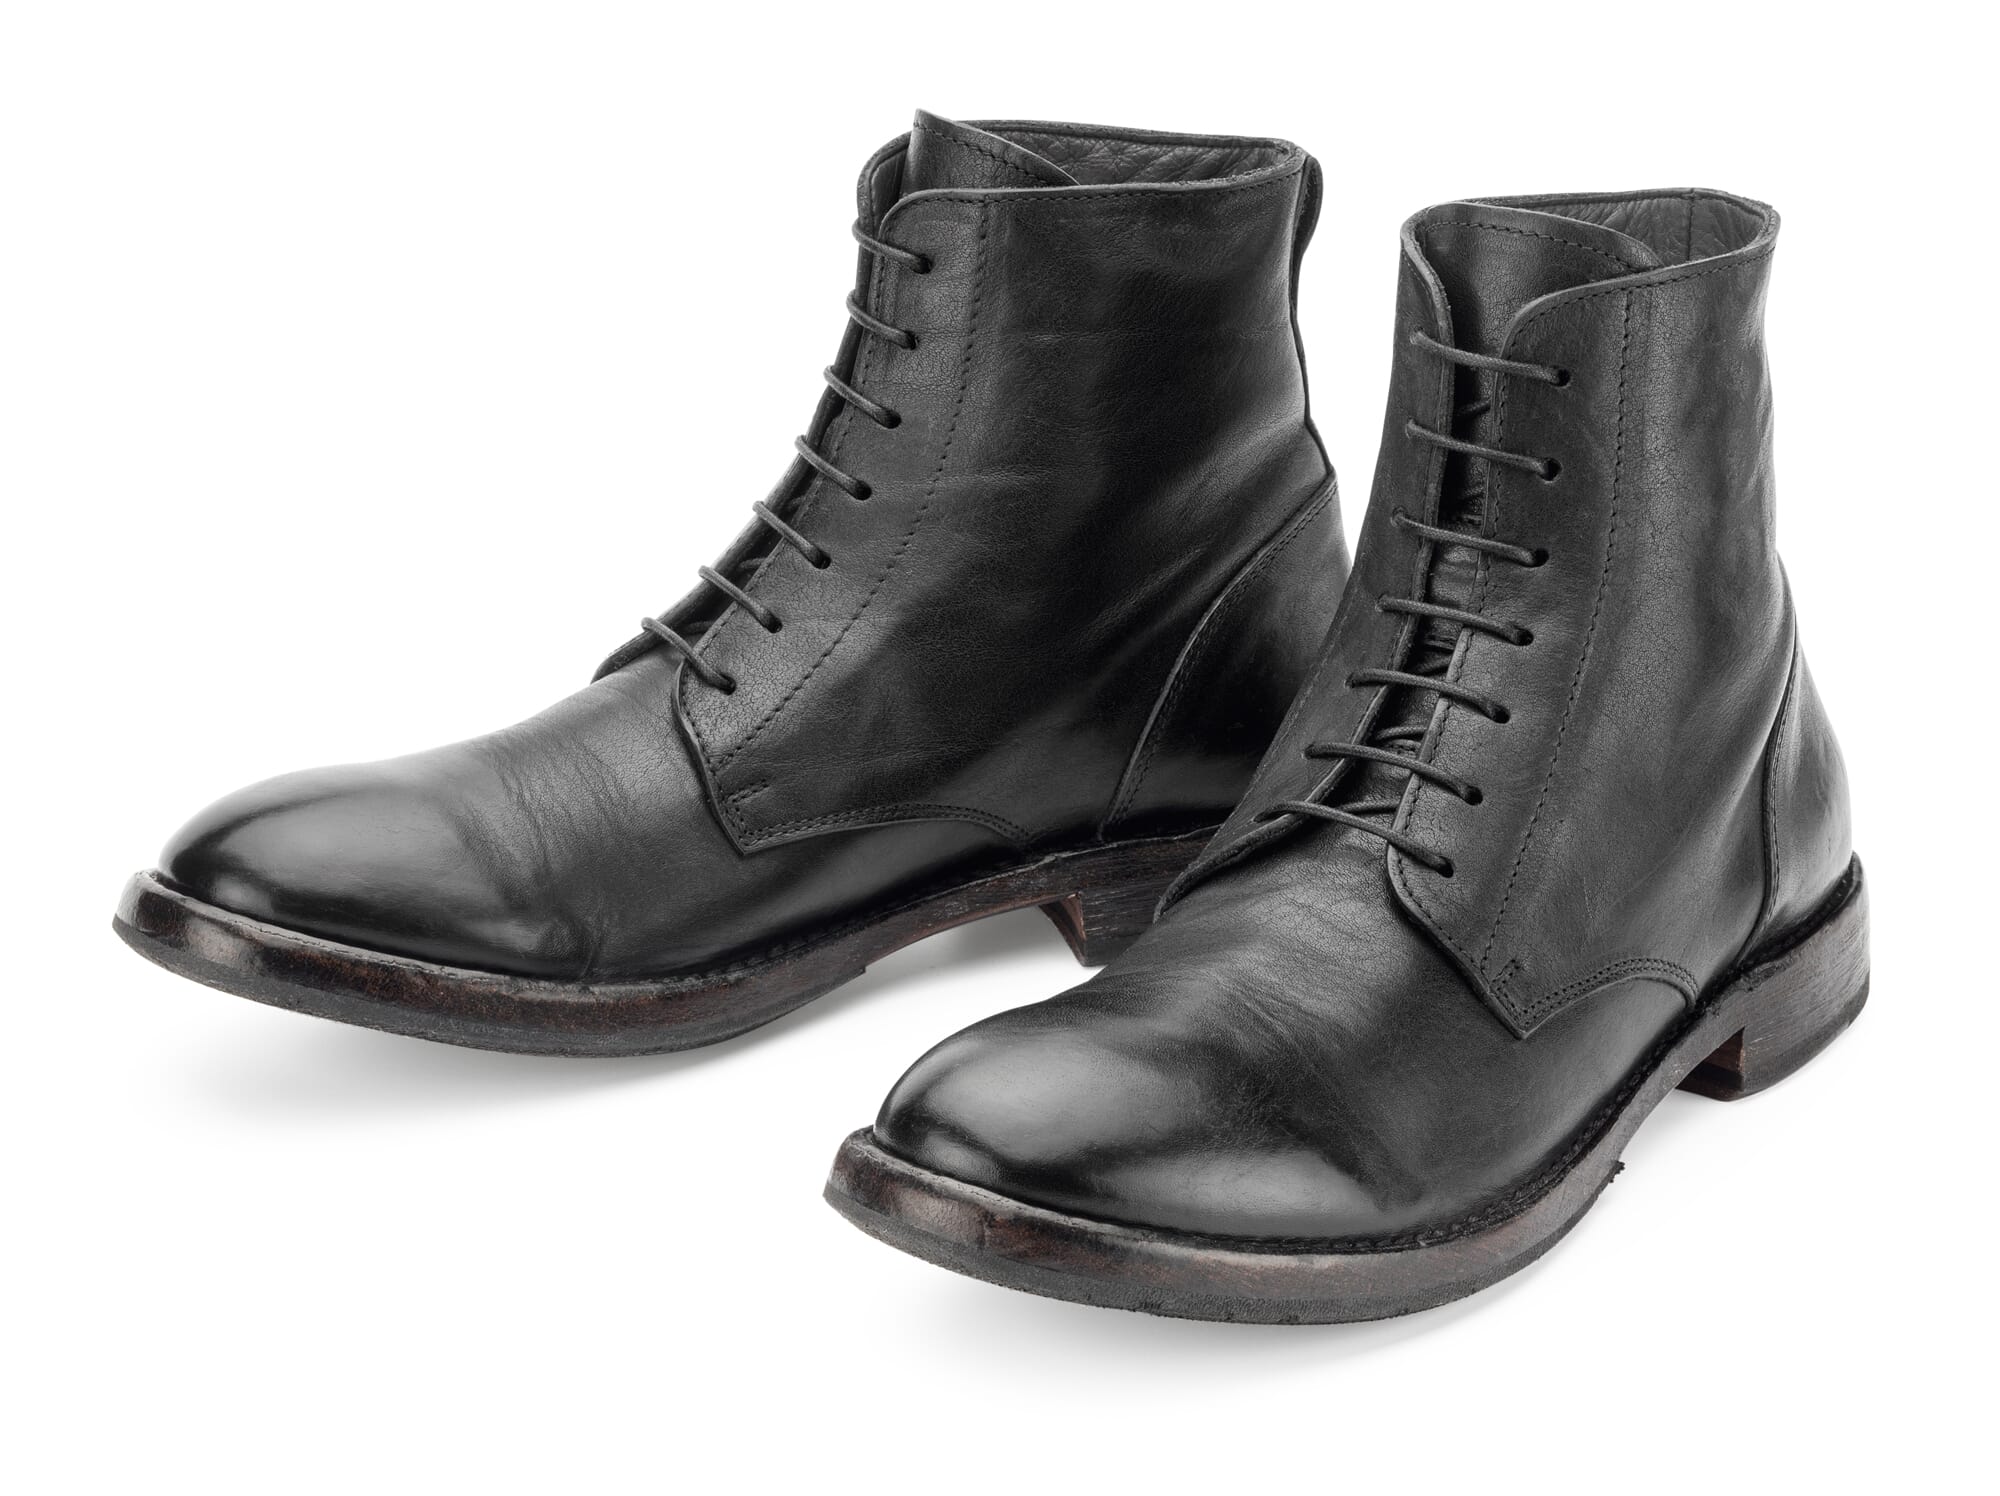 Condenseren bevestig alstublieft bang Men's lace-up boot, Black | Manufactum